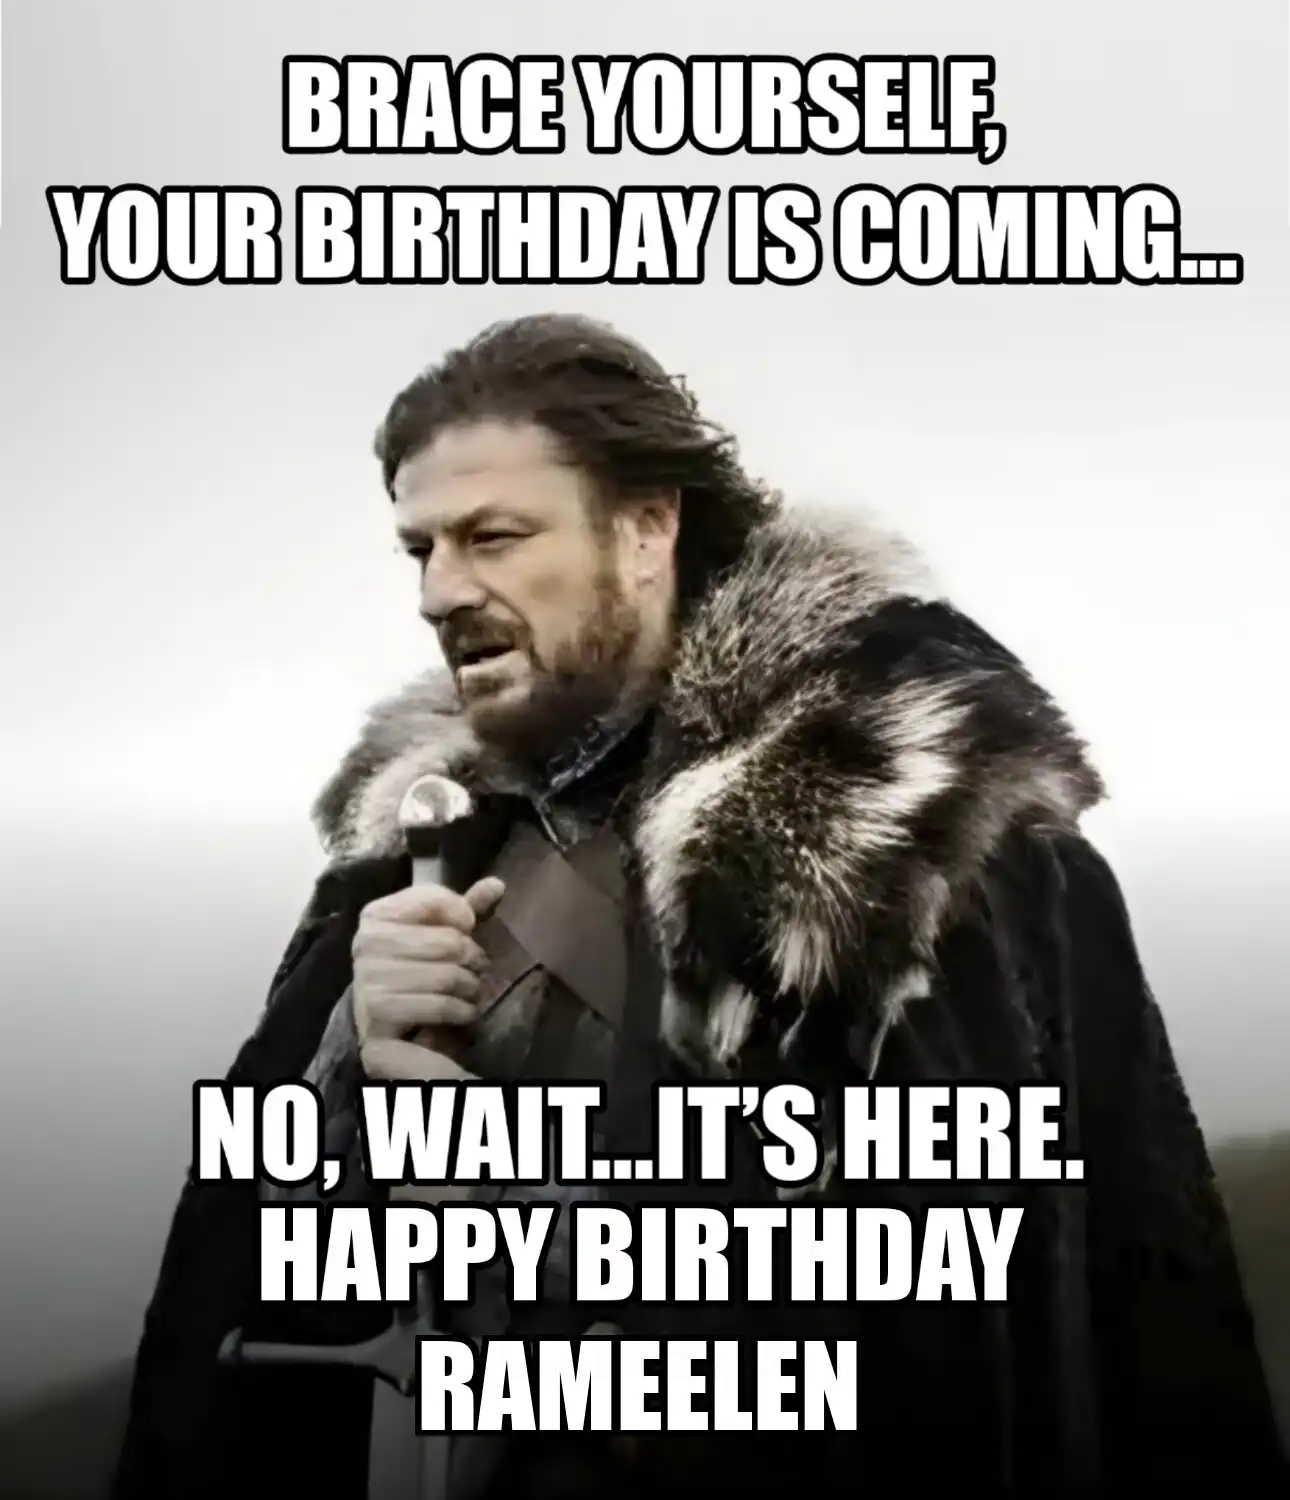 Happy Birthday Rameelen Brace Yourself Your Birthday Is Coming Meme